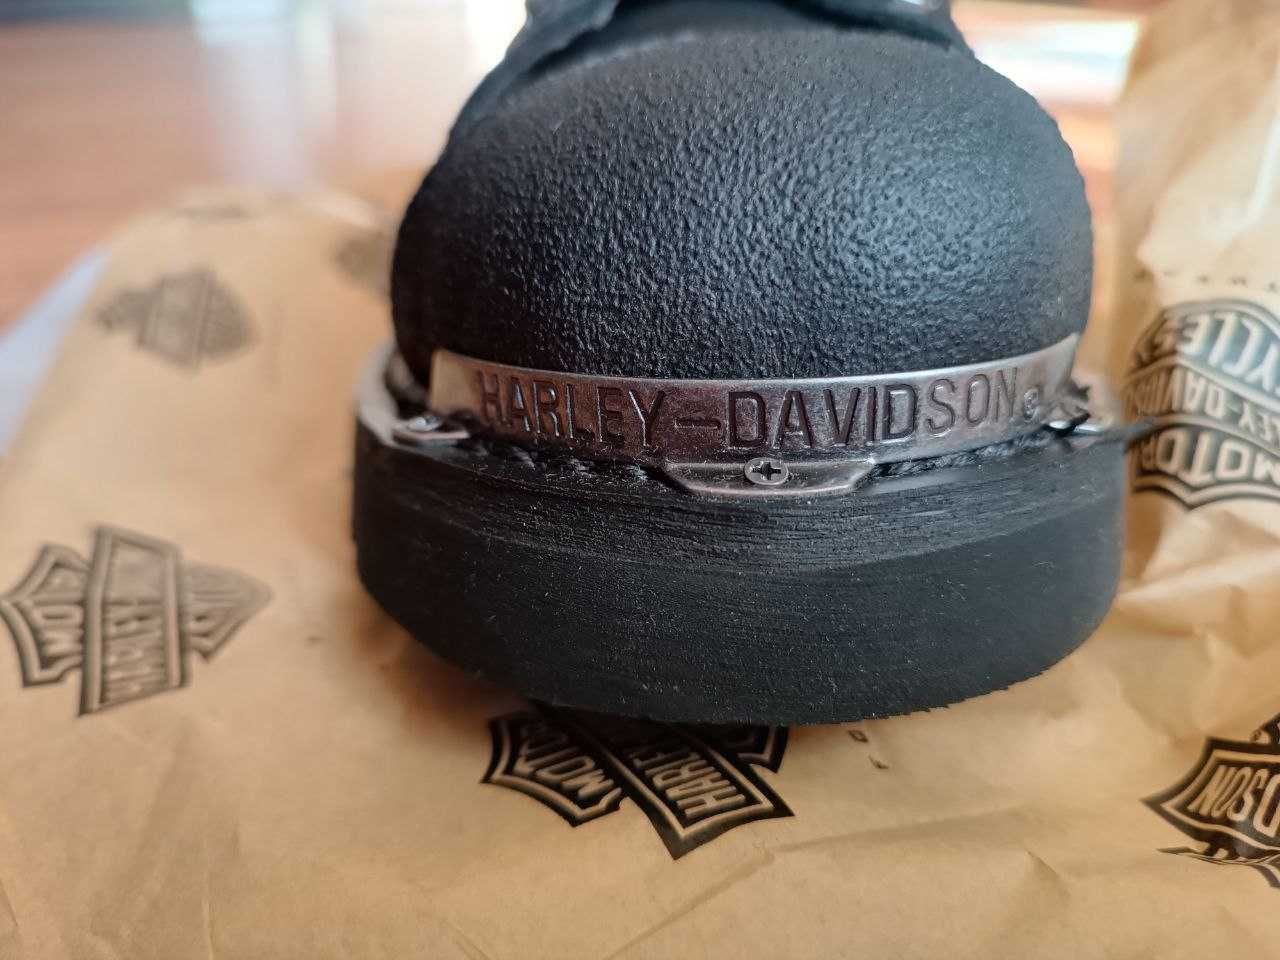 Байкерские ботинки Harey- Davidson